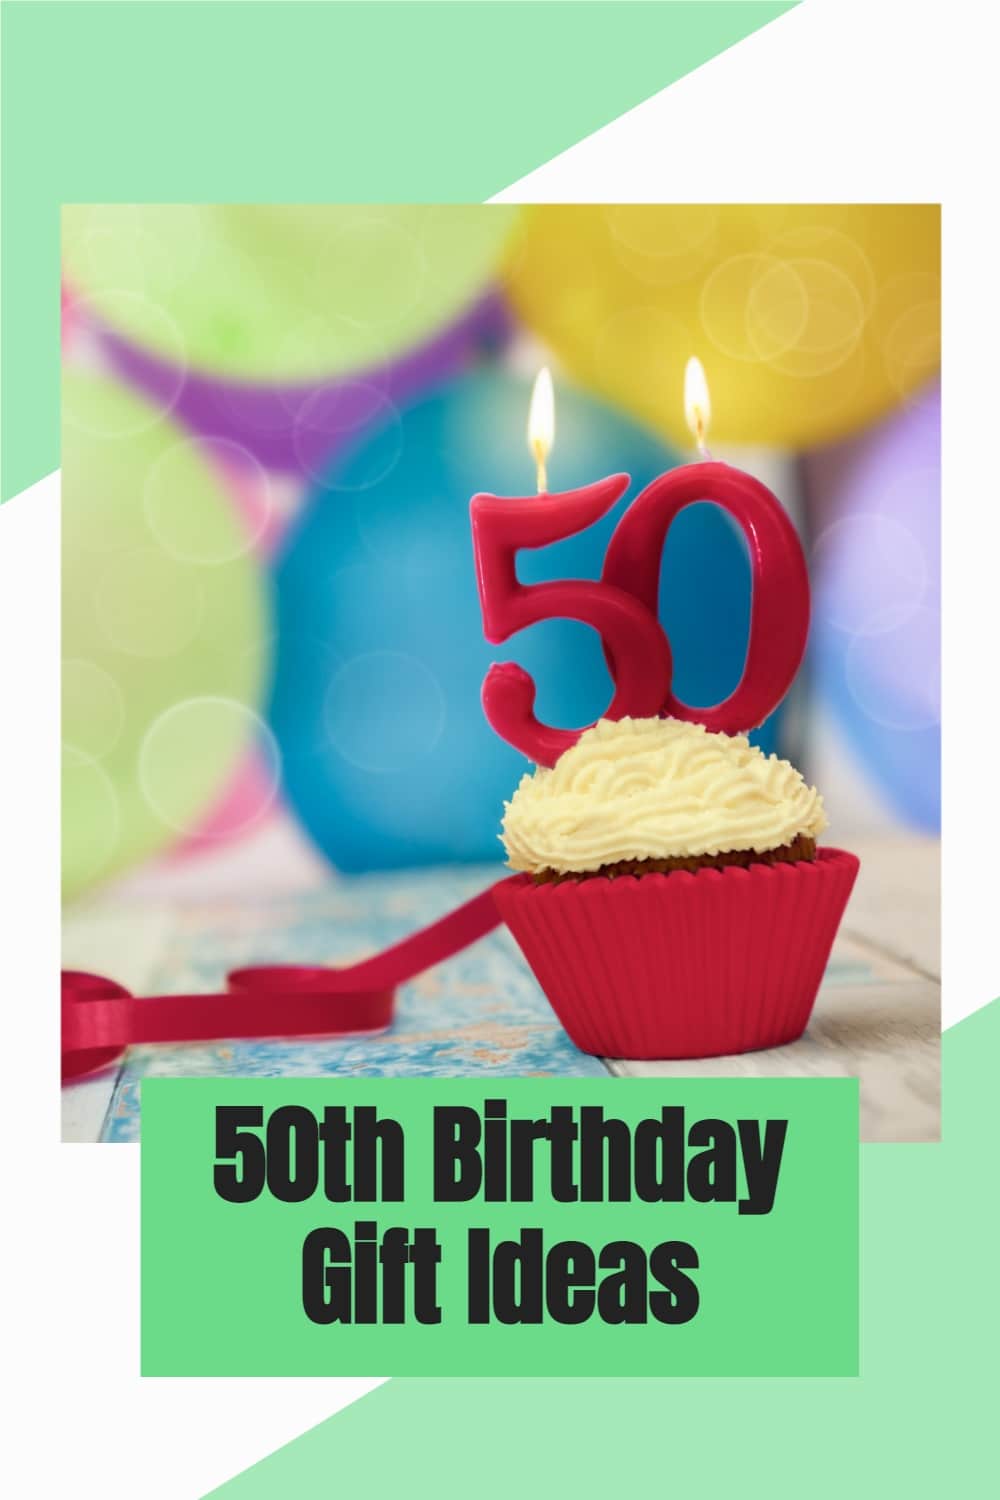 50th-Birthday-Gift-Ideas